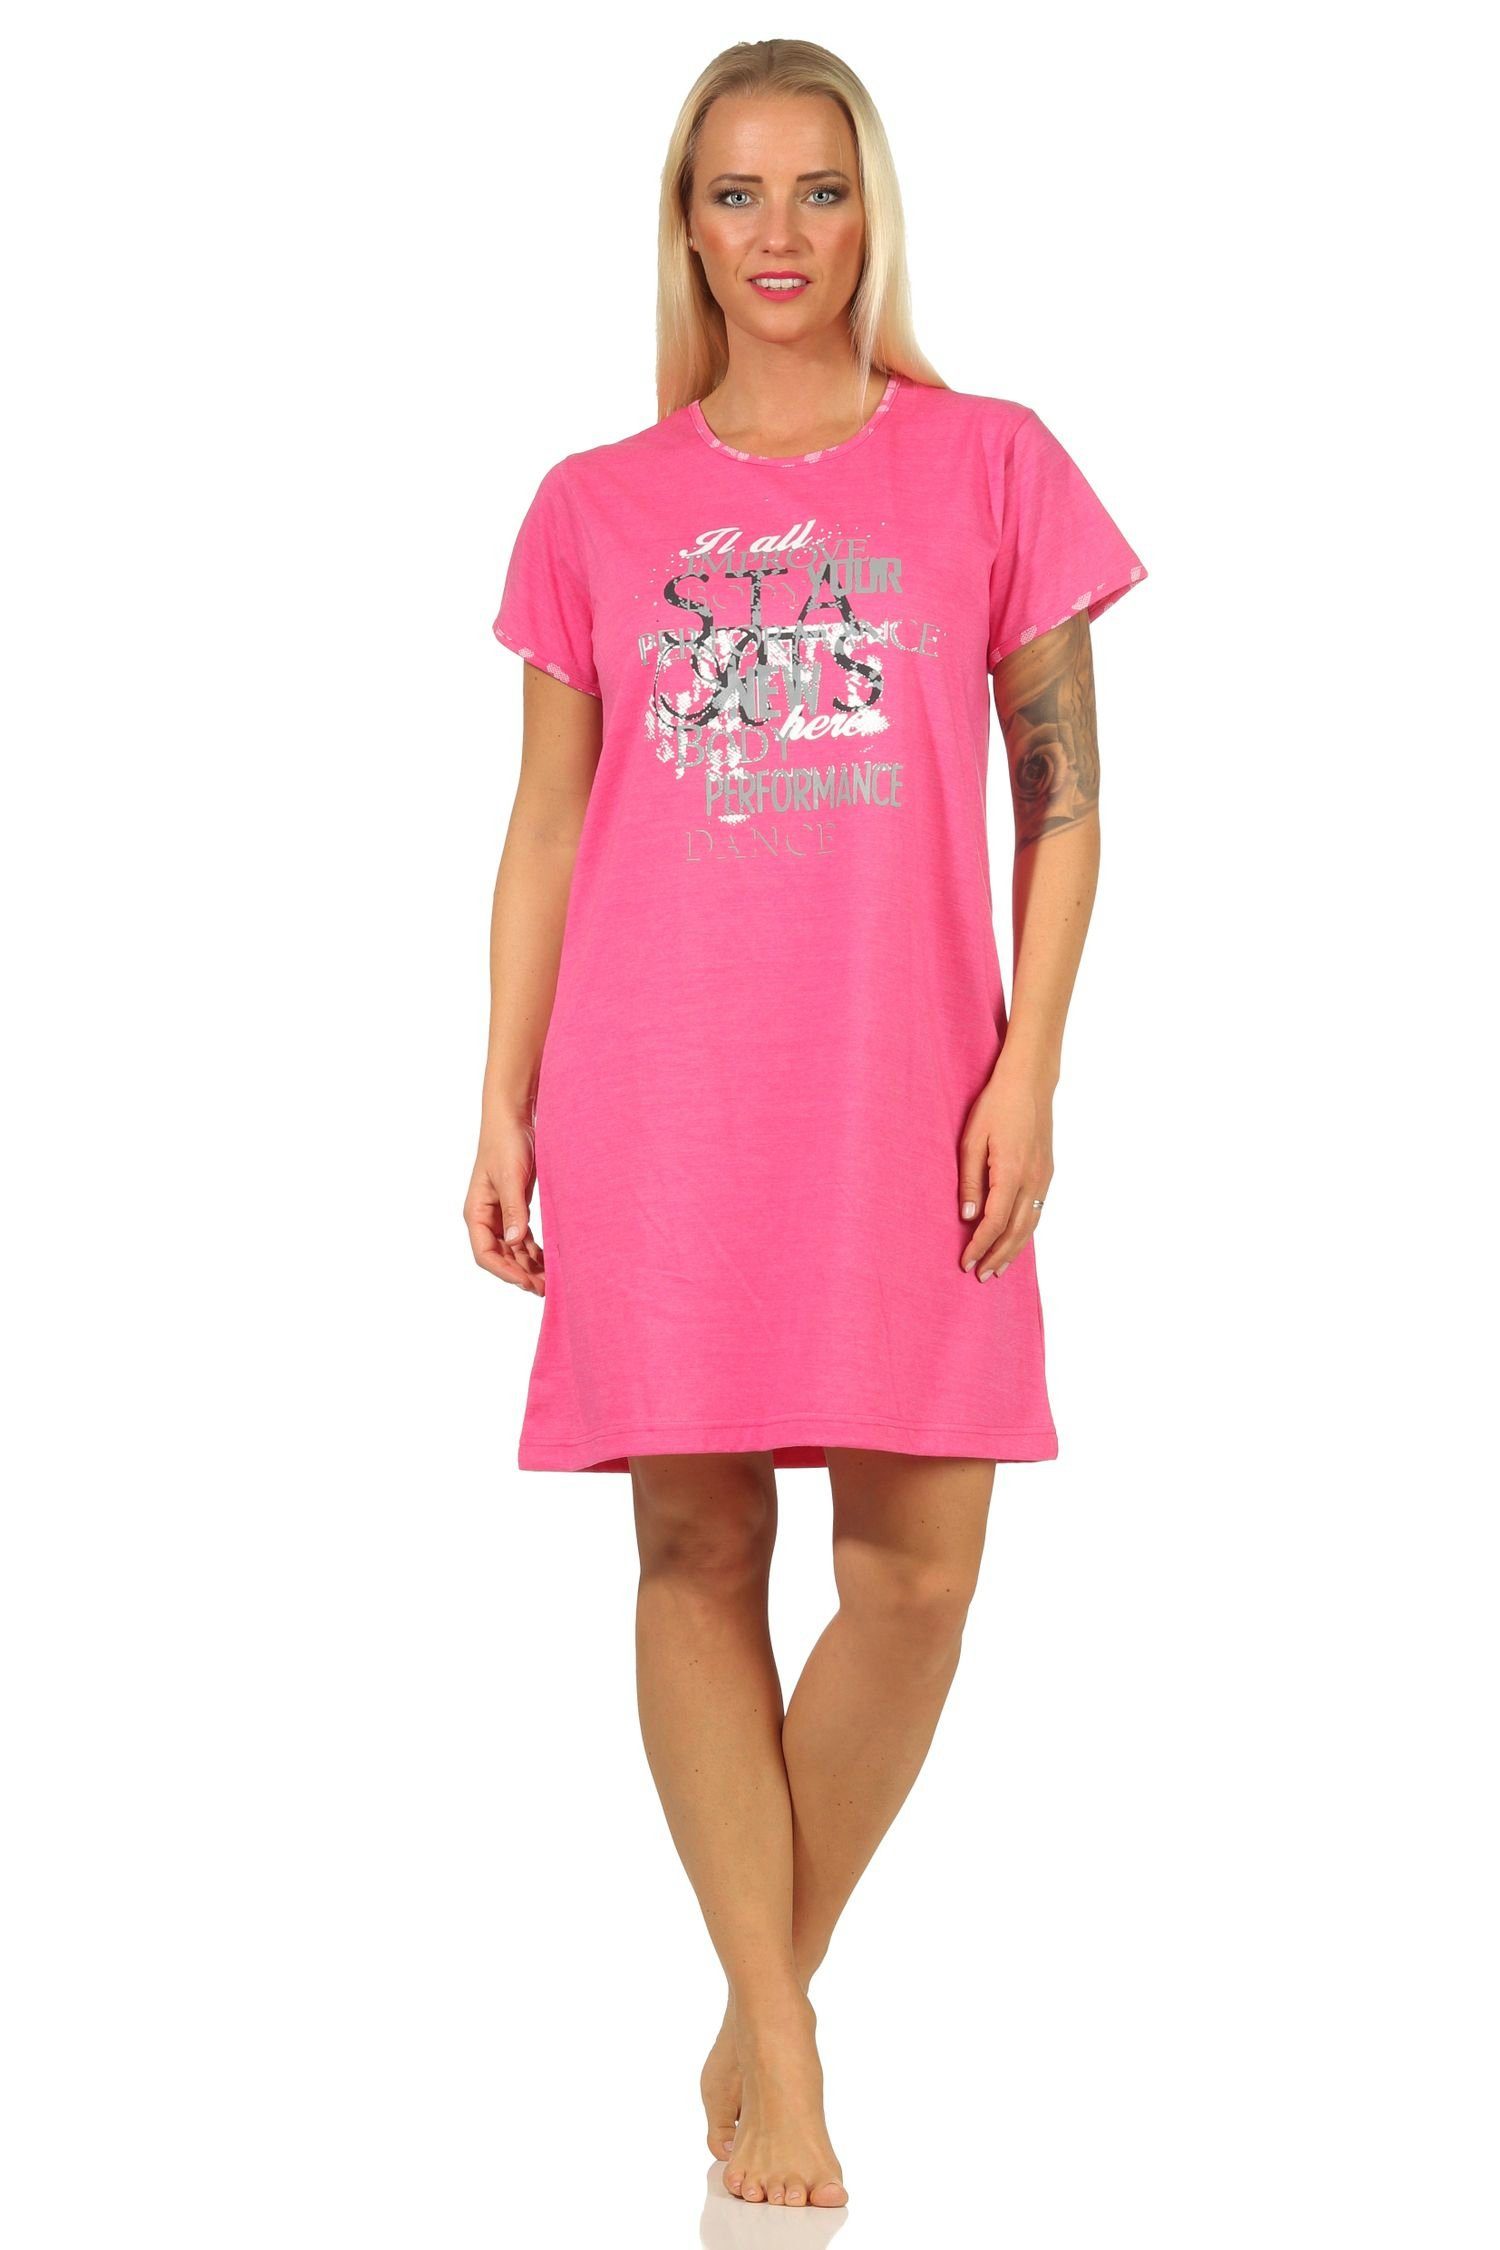 tollem - RELAX mit pink Nachthemd kurzarm Motiv 67140 Damen Nachthemd Normann by